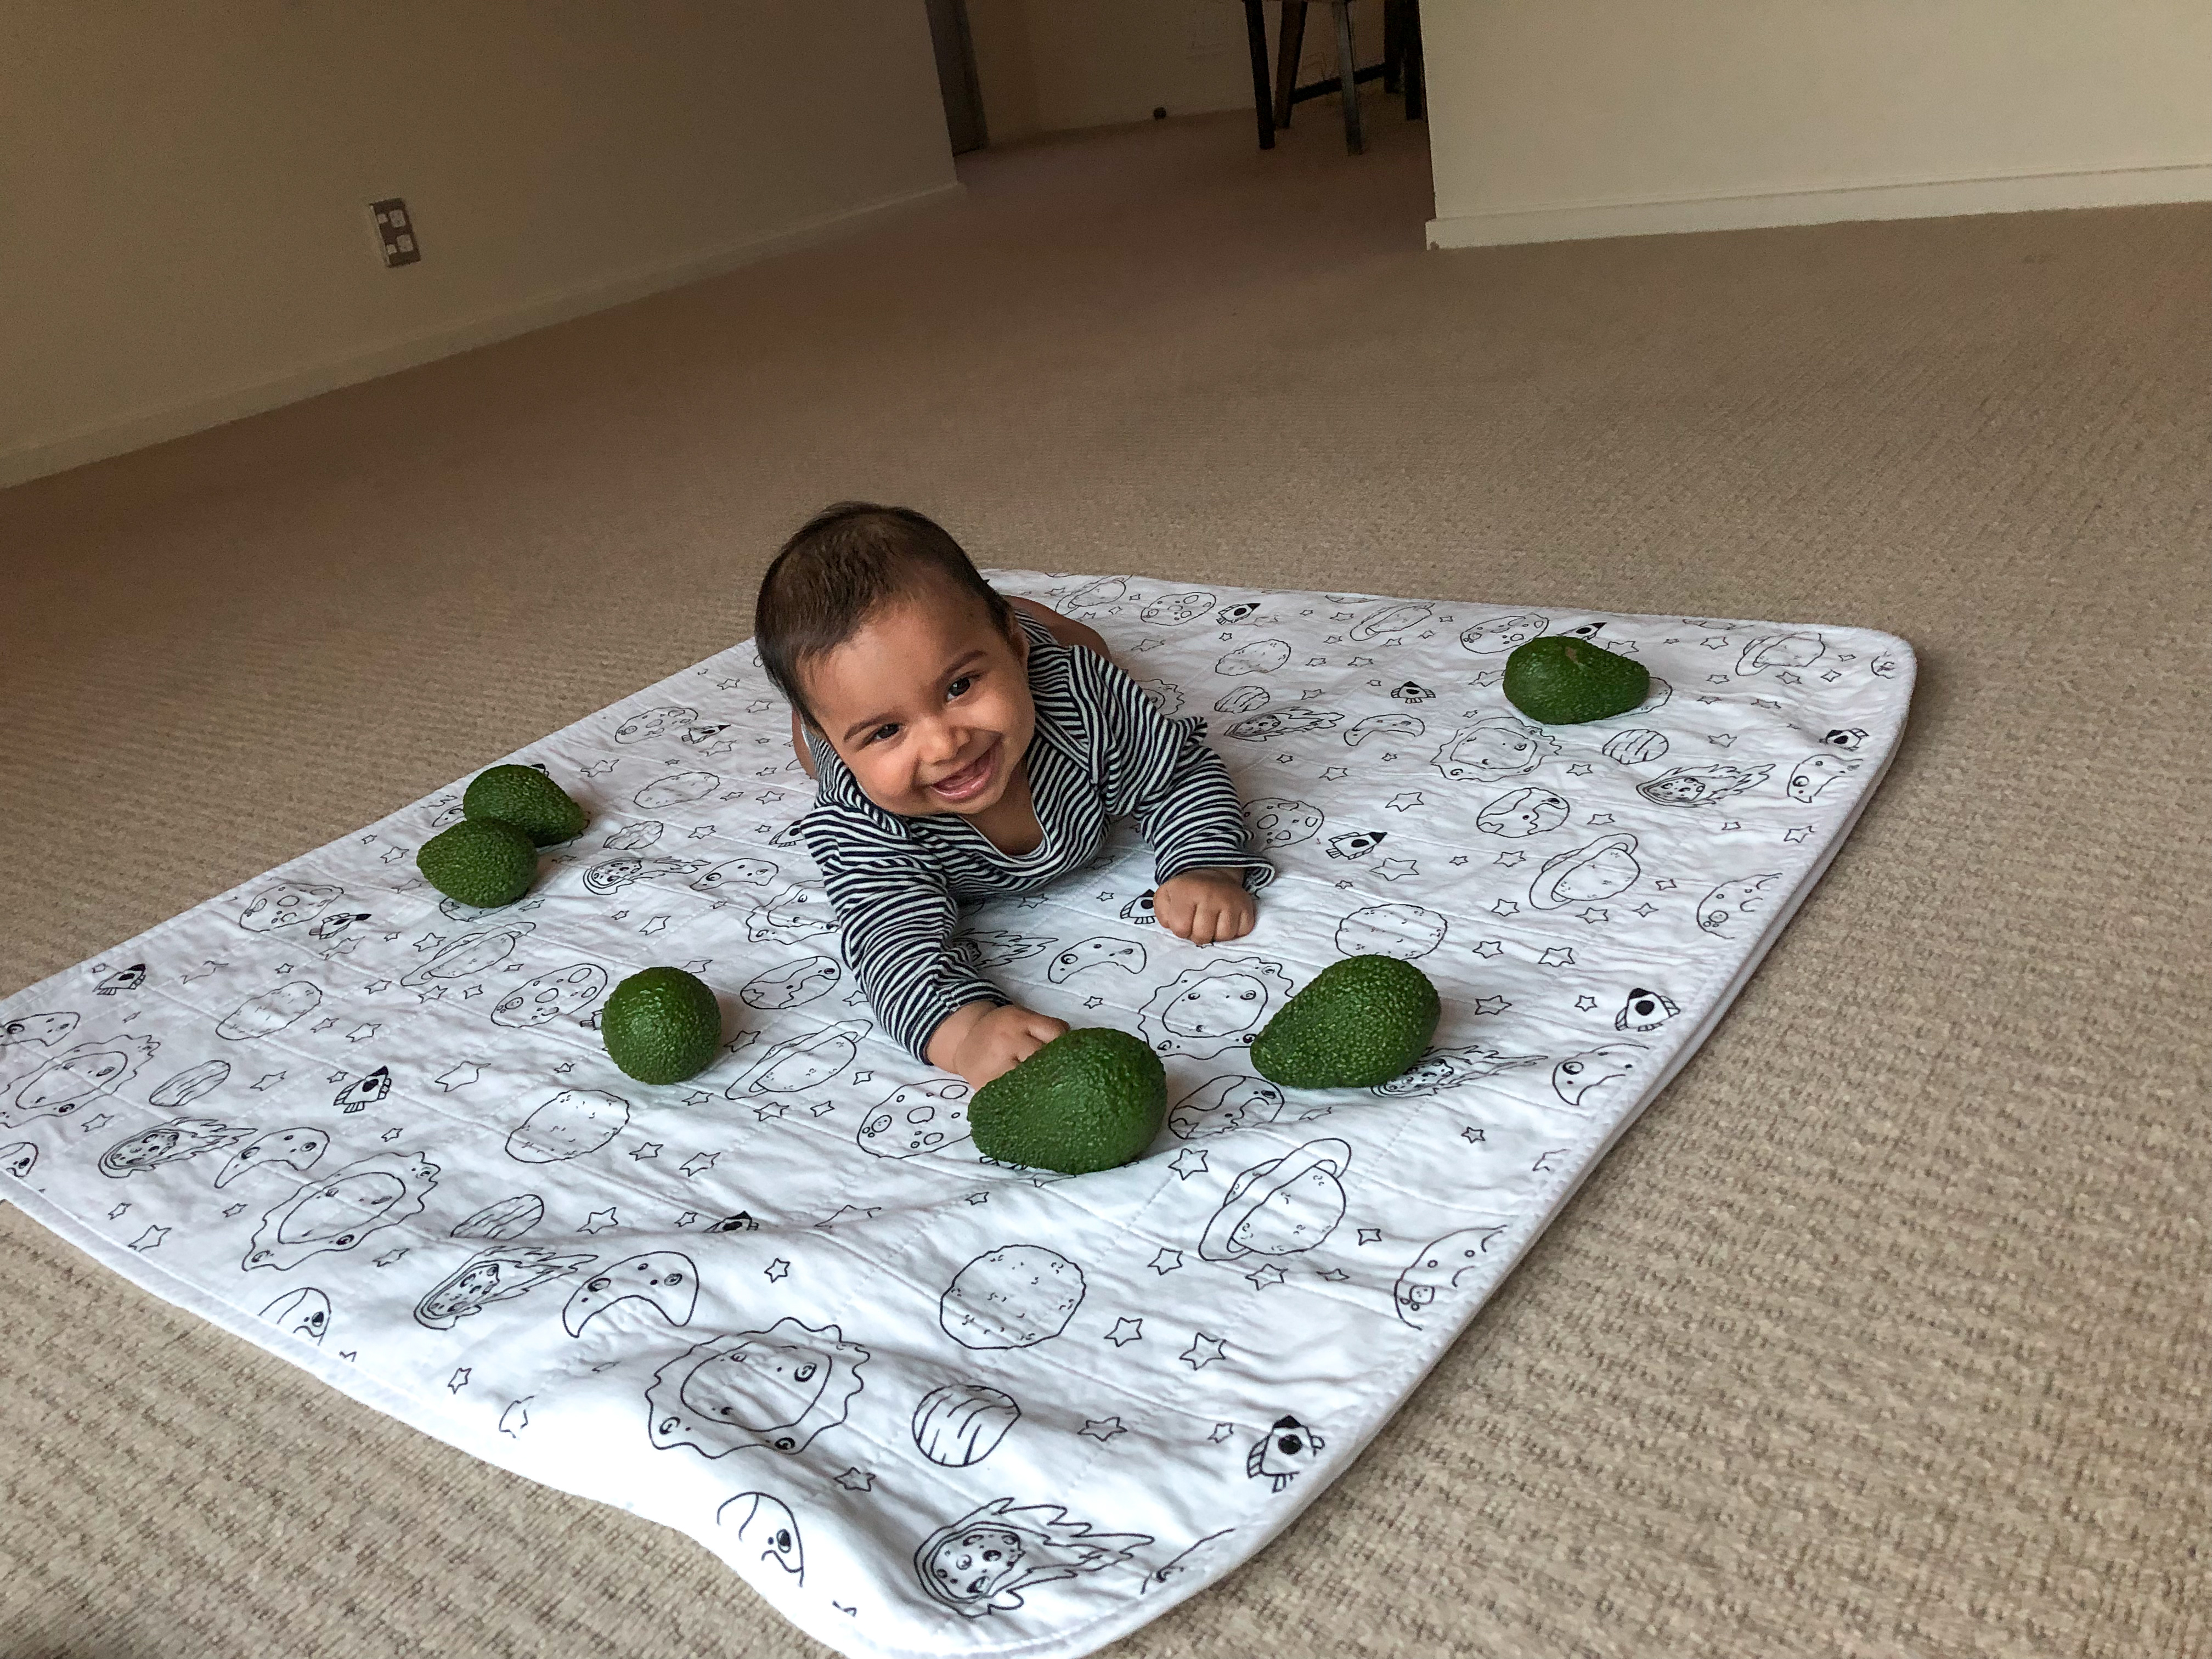 Montessori at 5 months